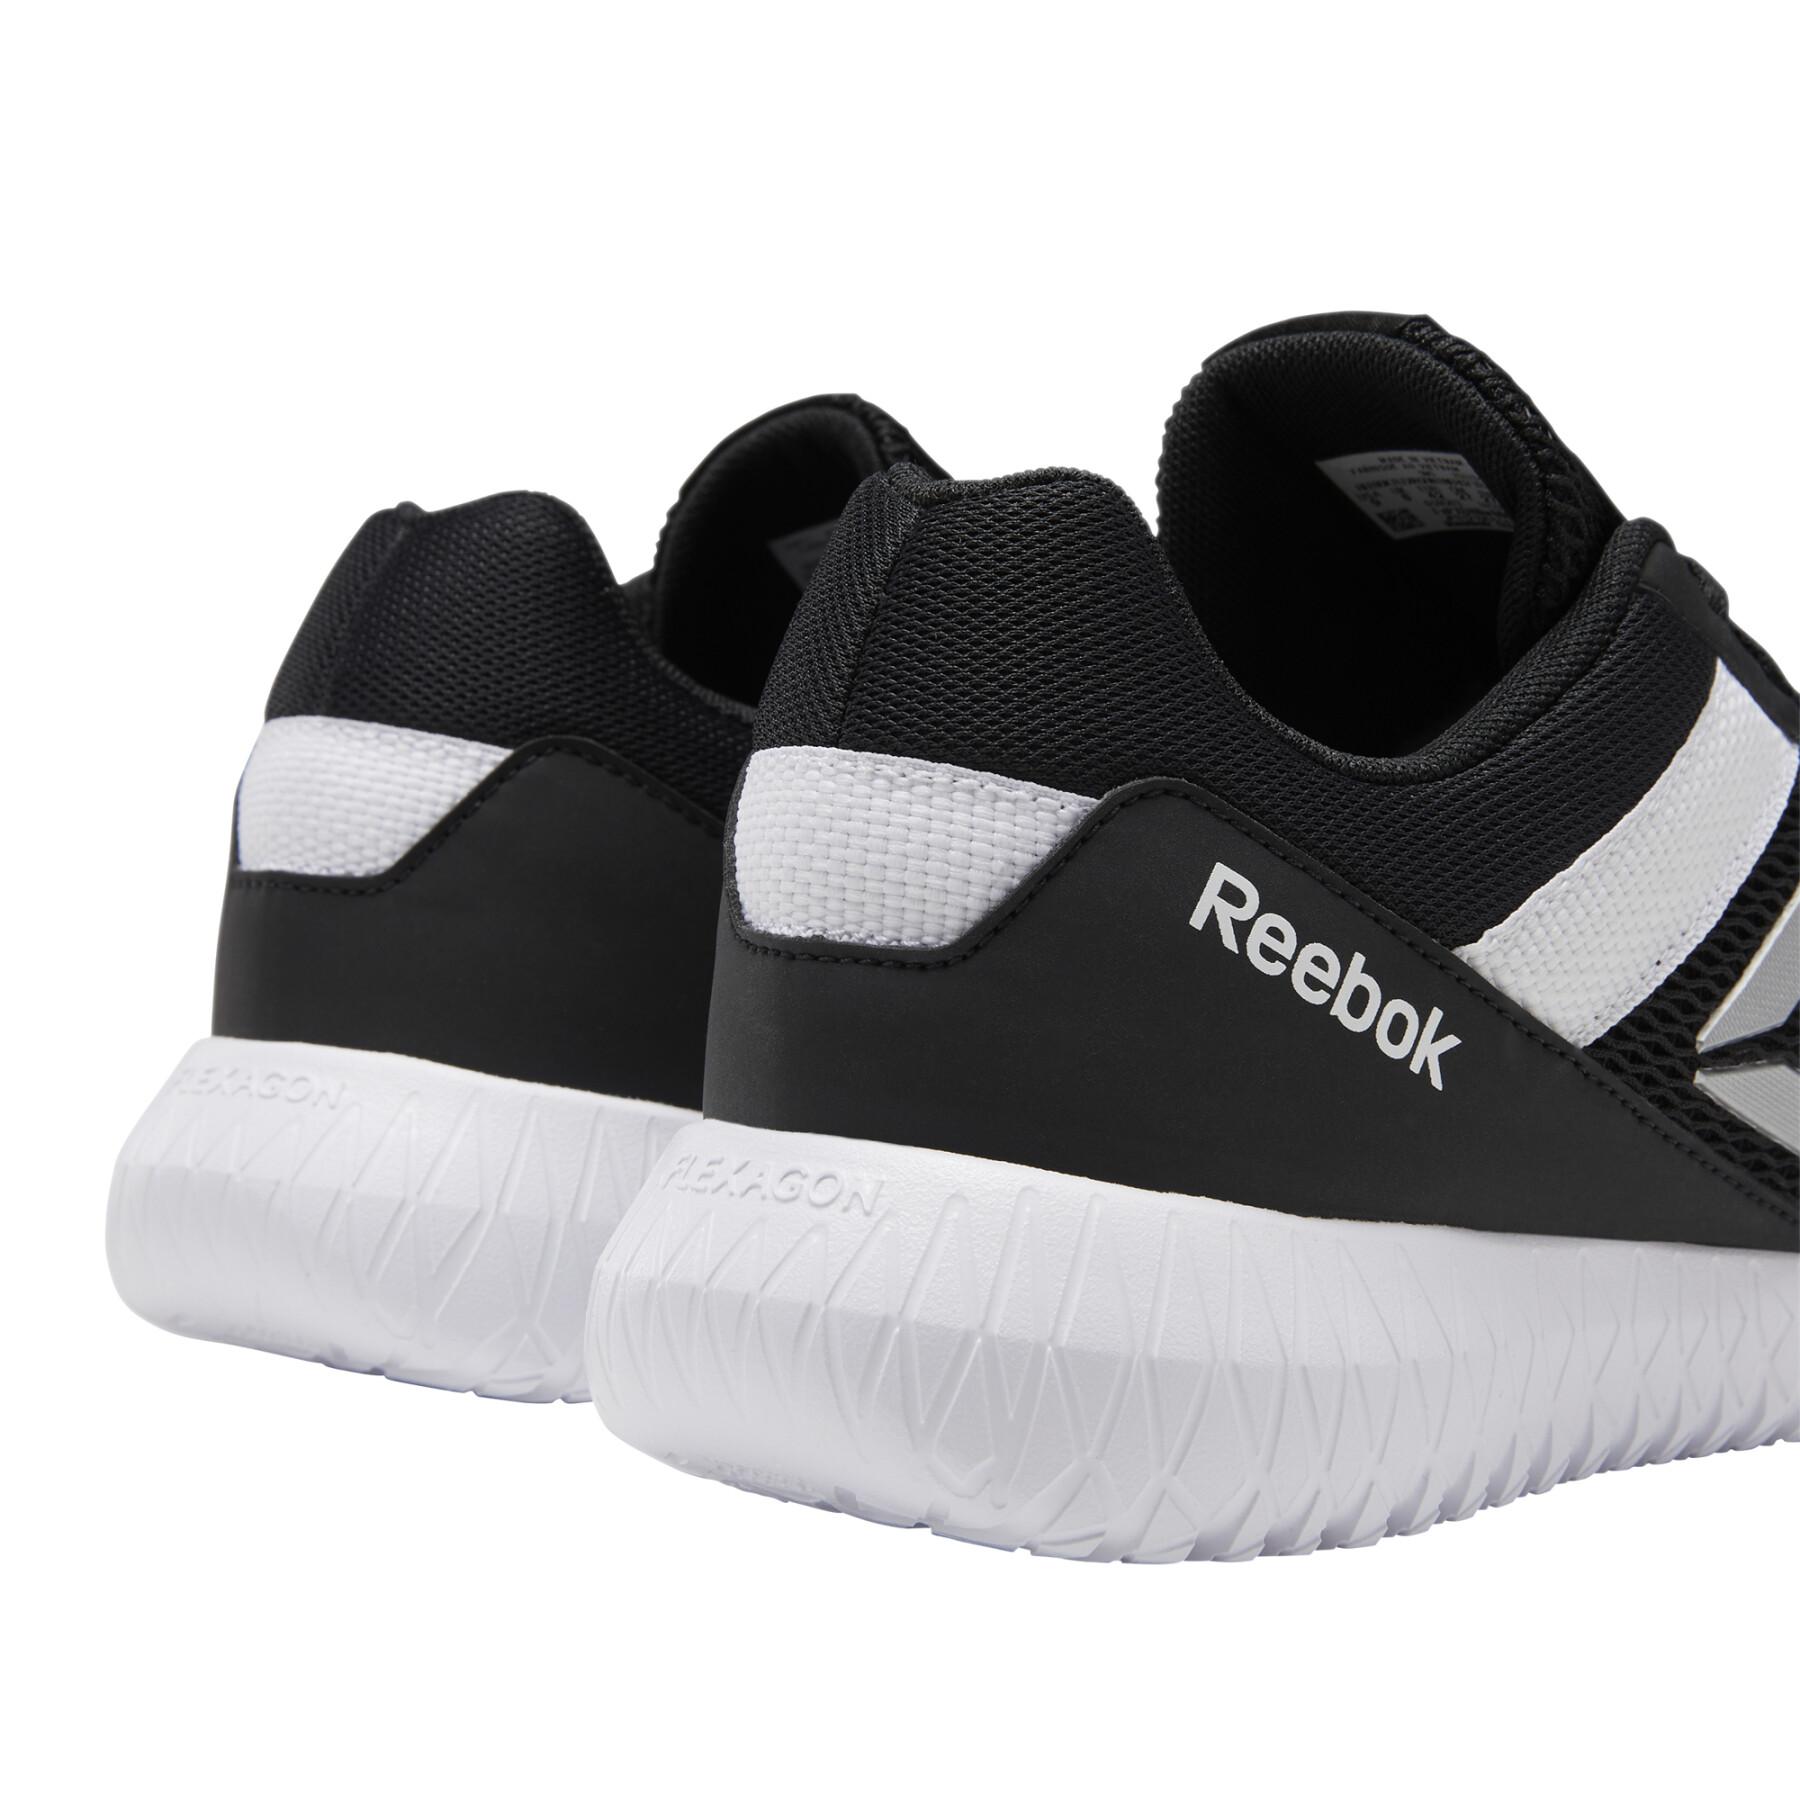 Schuhe Reebok Flexagon Energy